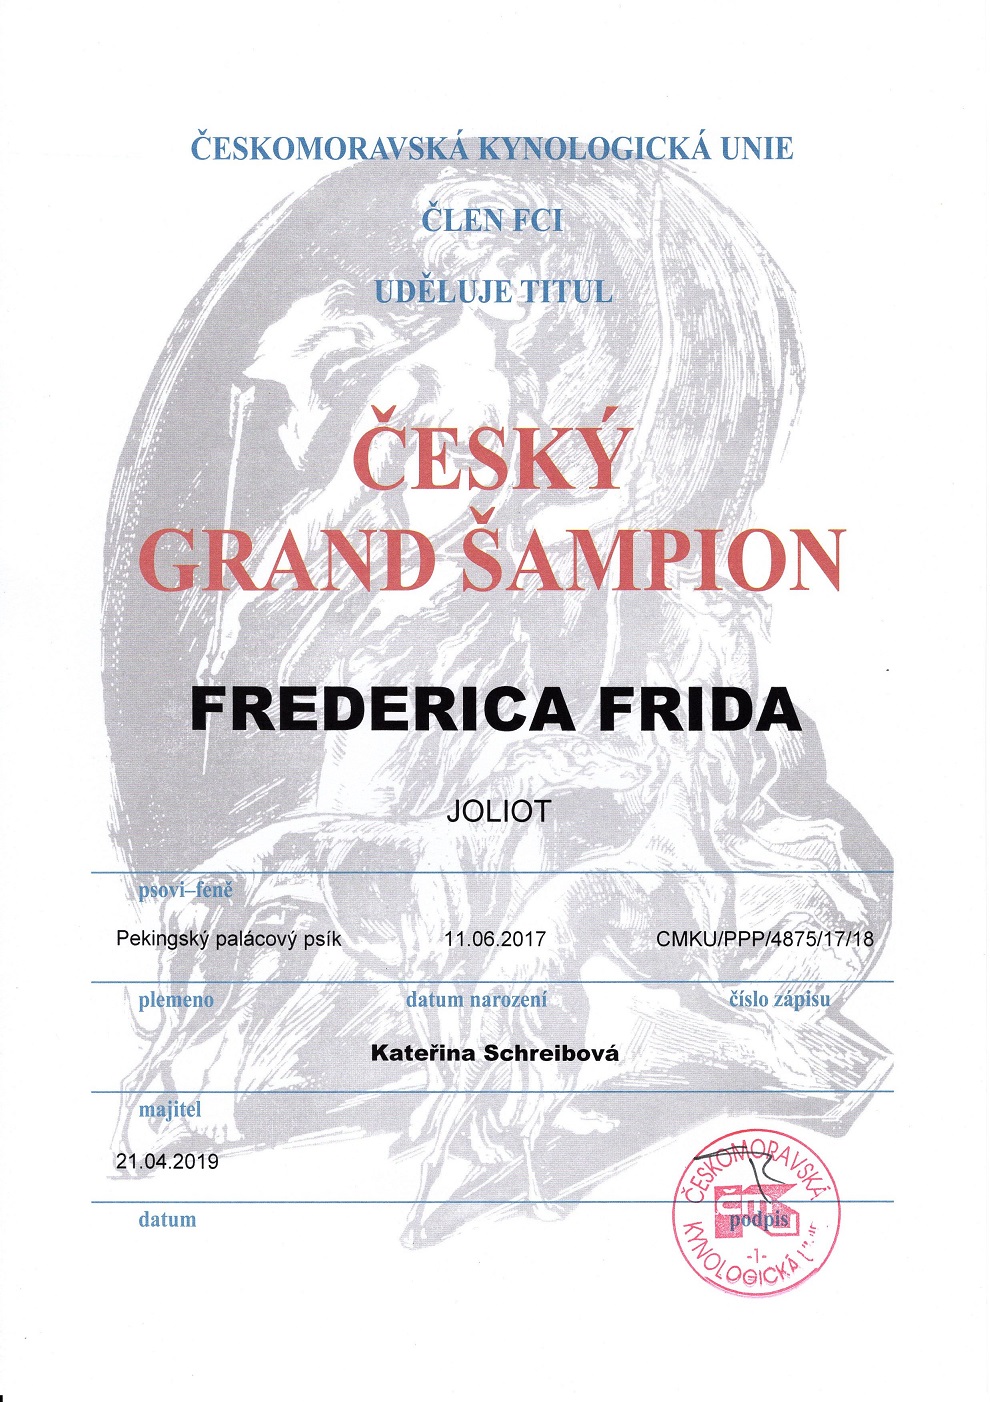 Grand champion CZ - Frederica Frida Joliot